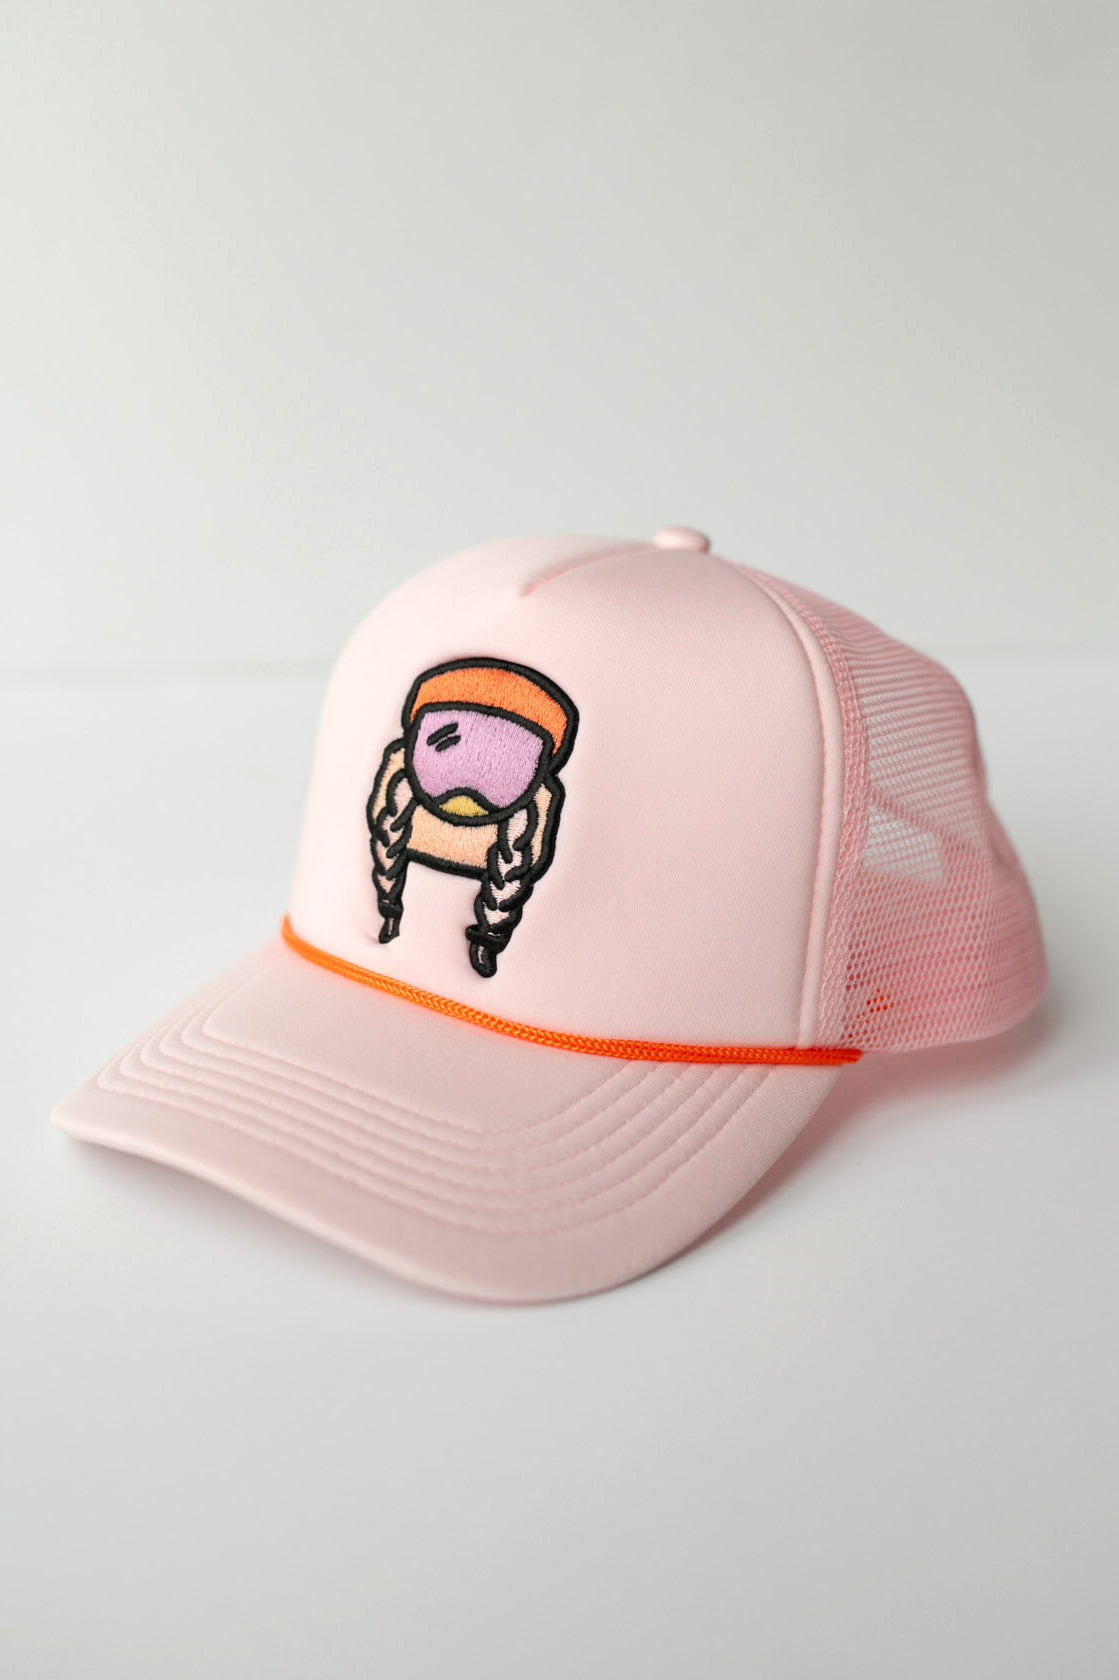 Hats – Ski Like a Girl